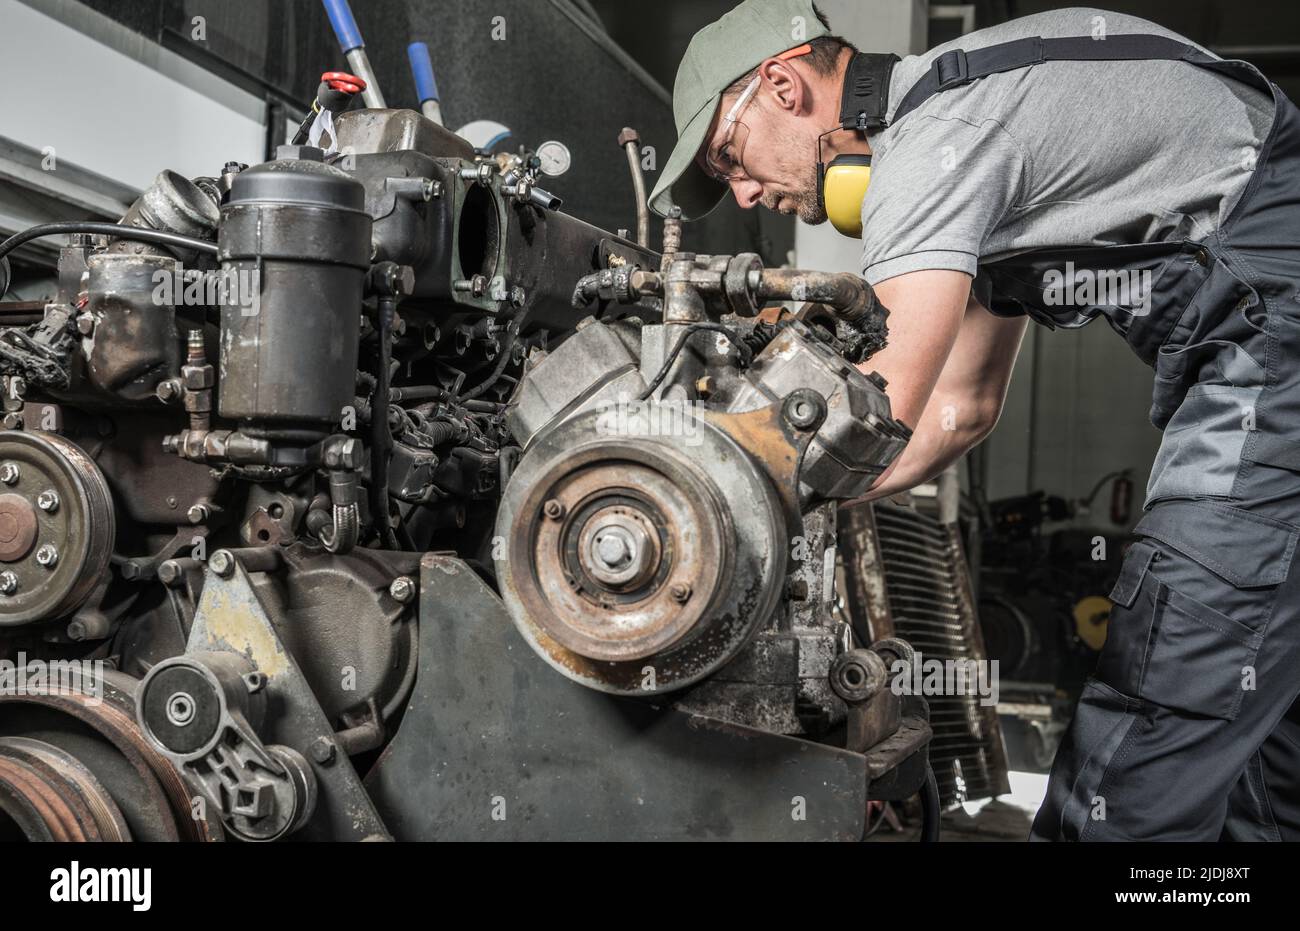 Rebuilding Heavy Duty Coach Bus Diesel Engine. Professional Caucasian Mechanic Taking Closer Look. Automotive Industry. Stock Photo